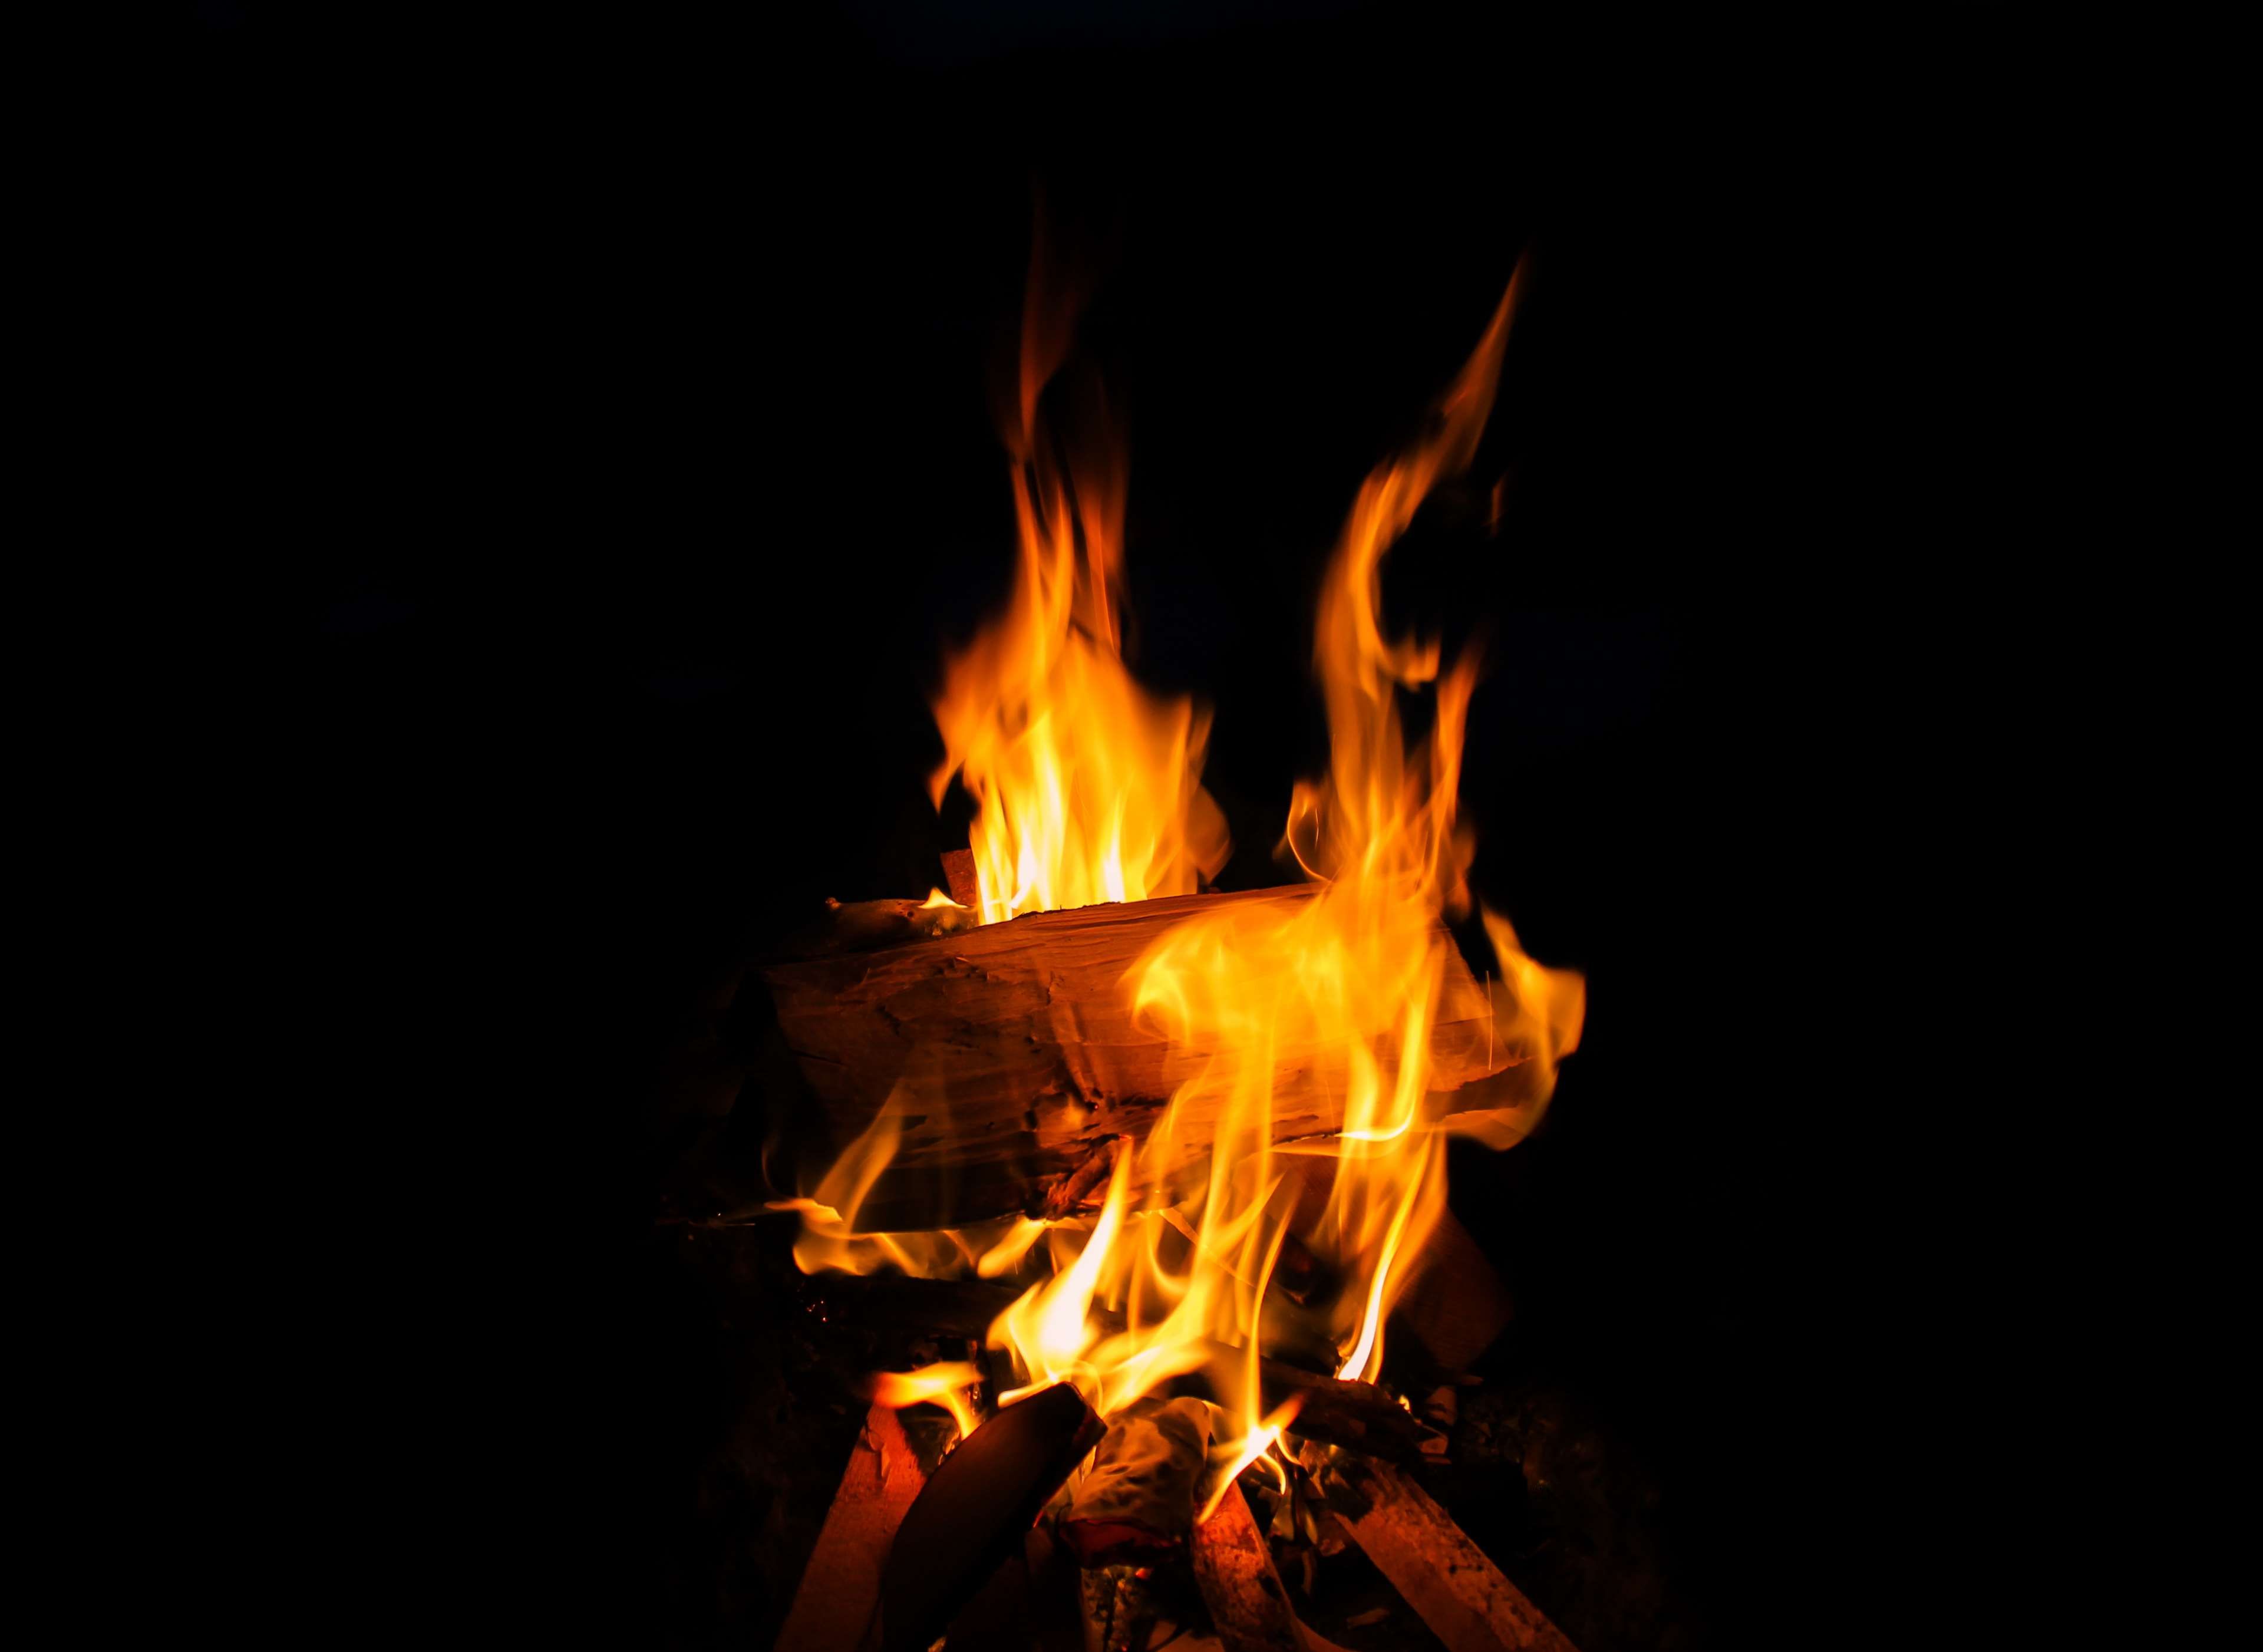 ash, background, black, blaze, bonfire, bright, burn, burning, burnt, campfire, charcoal, close up, coal, conceptual, danger, dark, detail, energy, fire, fireplace, firewood, flame, glow, glowing, heat, hot, ignite, illust 4k wallpaper